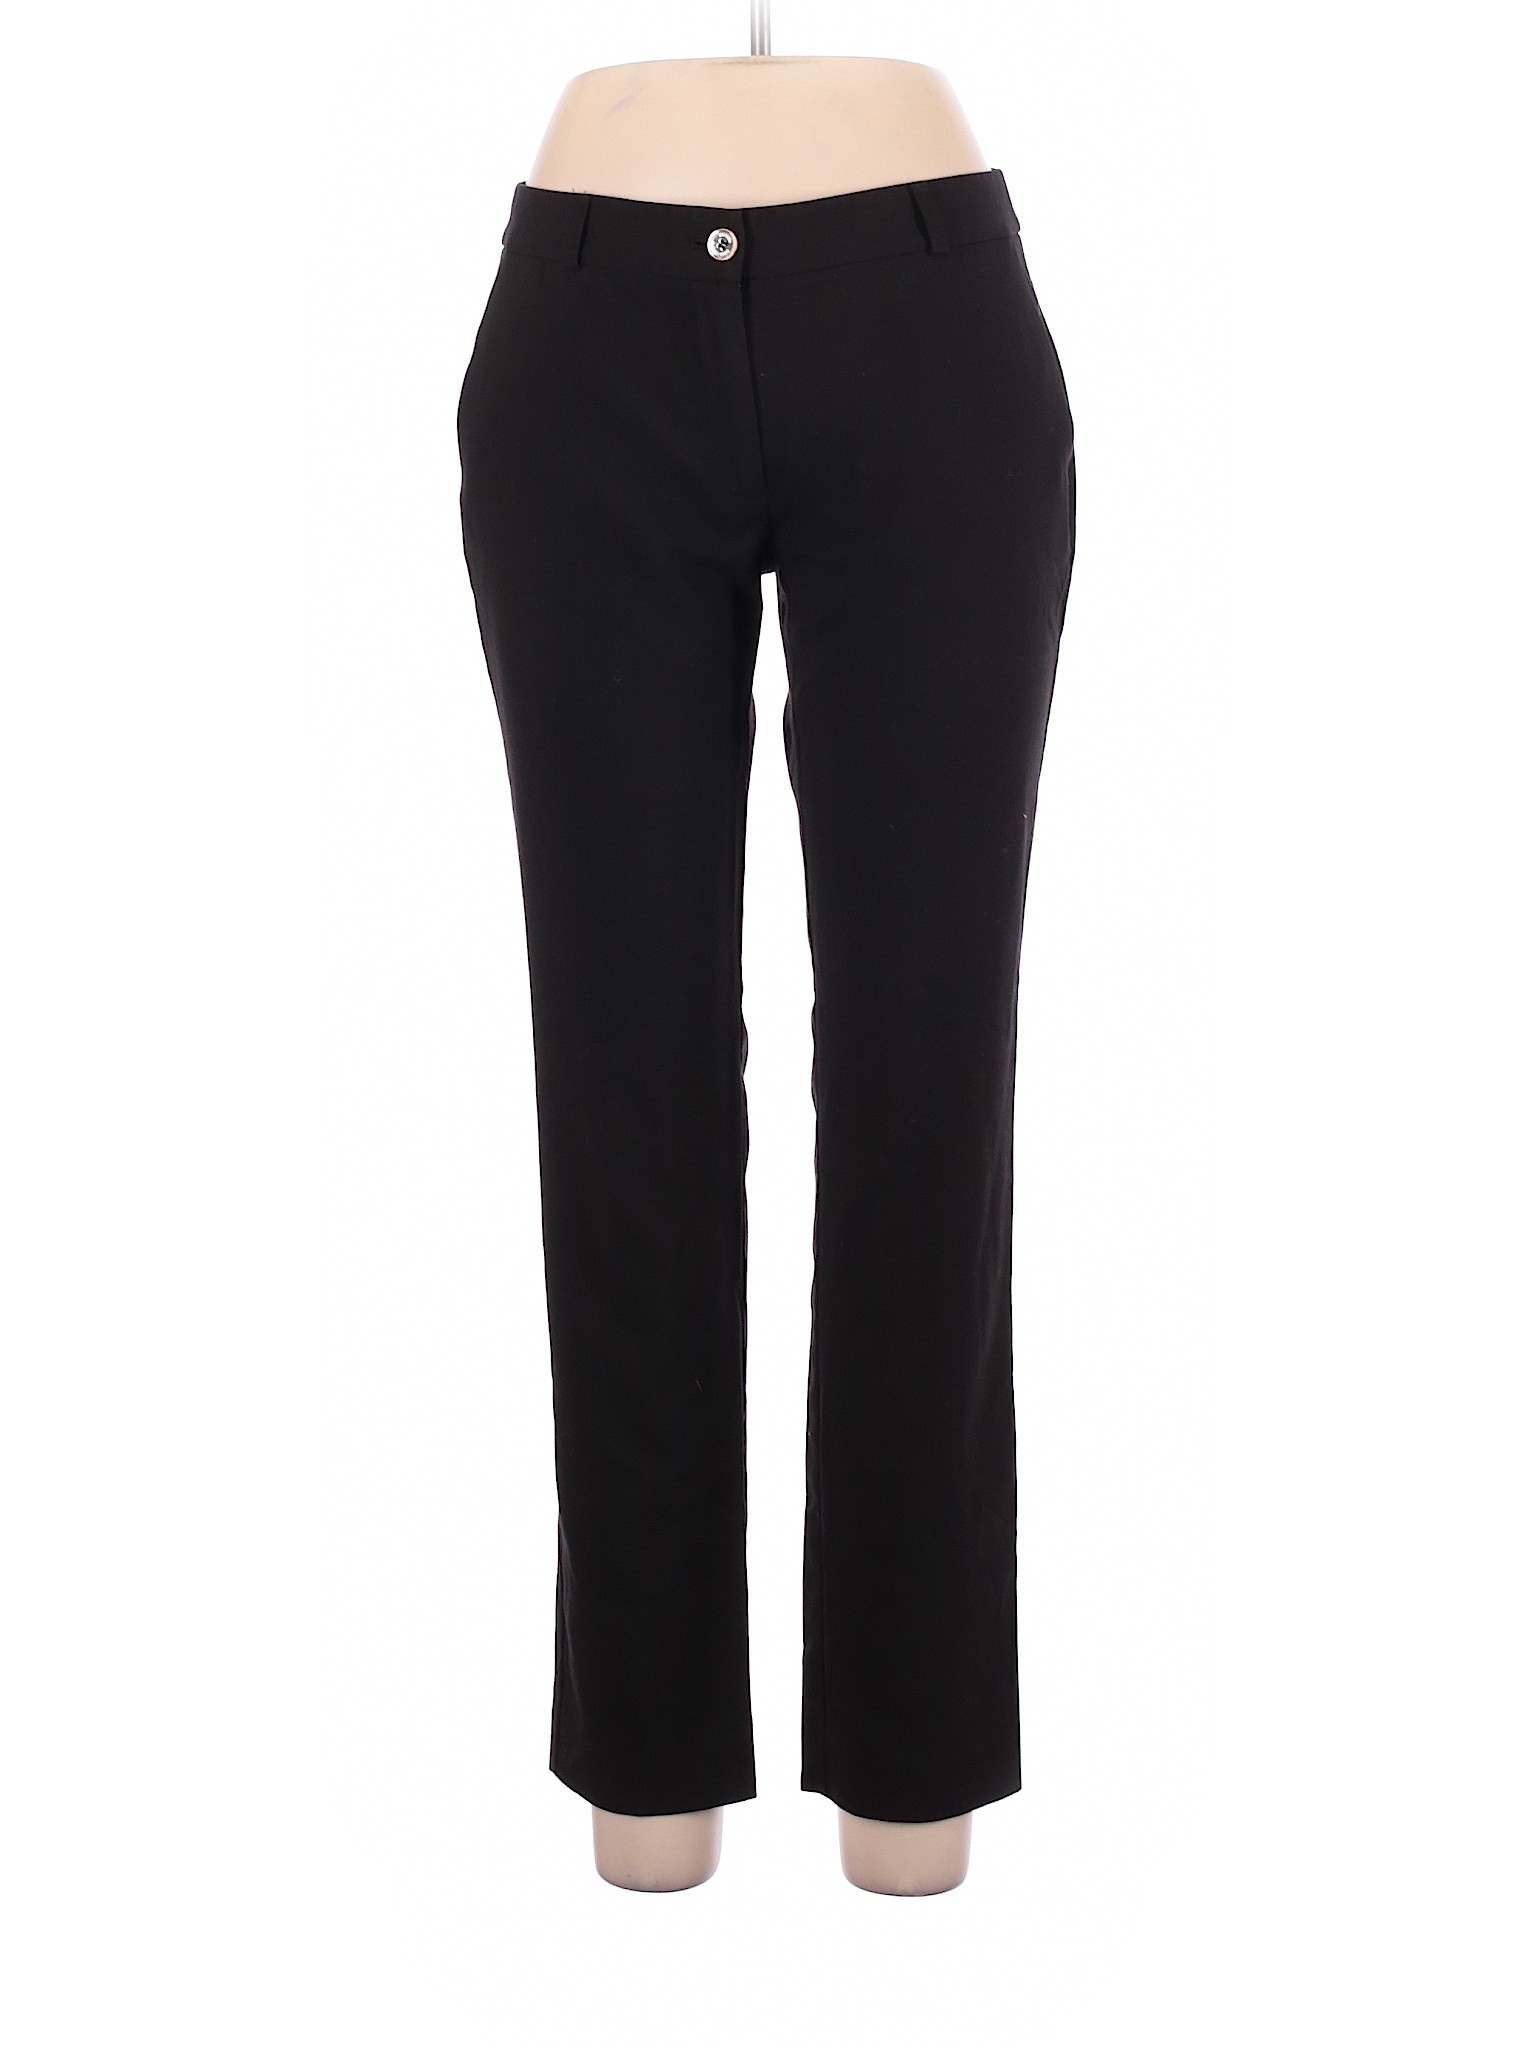 MICHAEL Michael Kors Women Black Dress Pants 6 | eBay